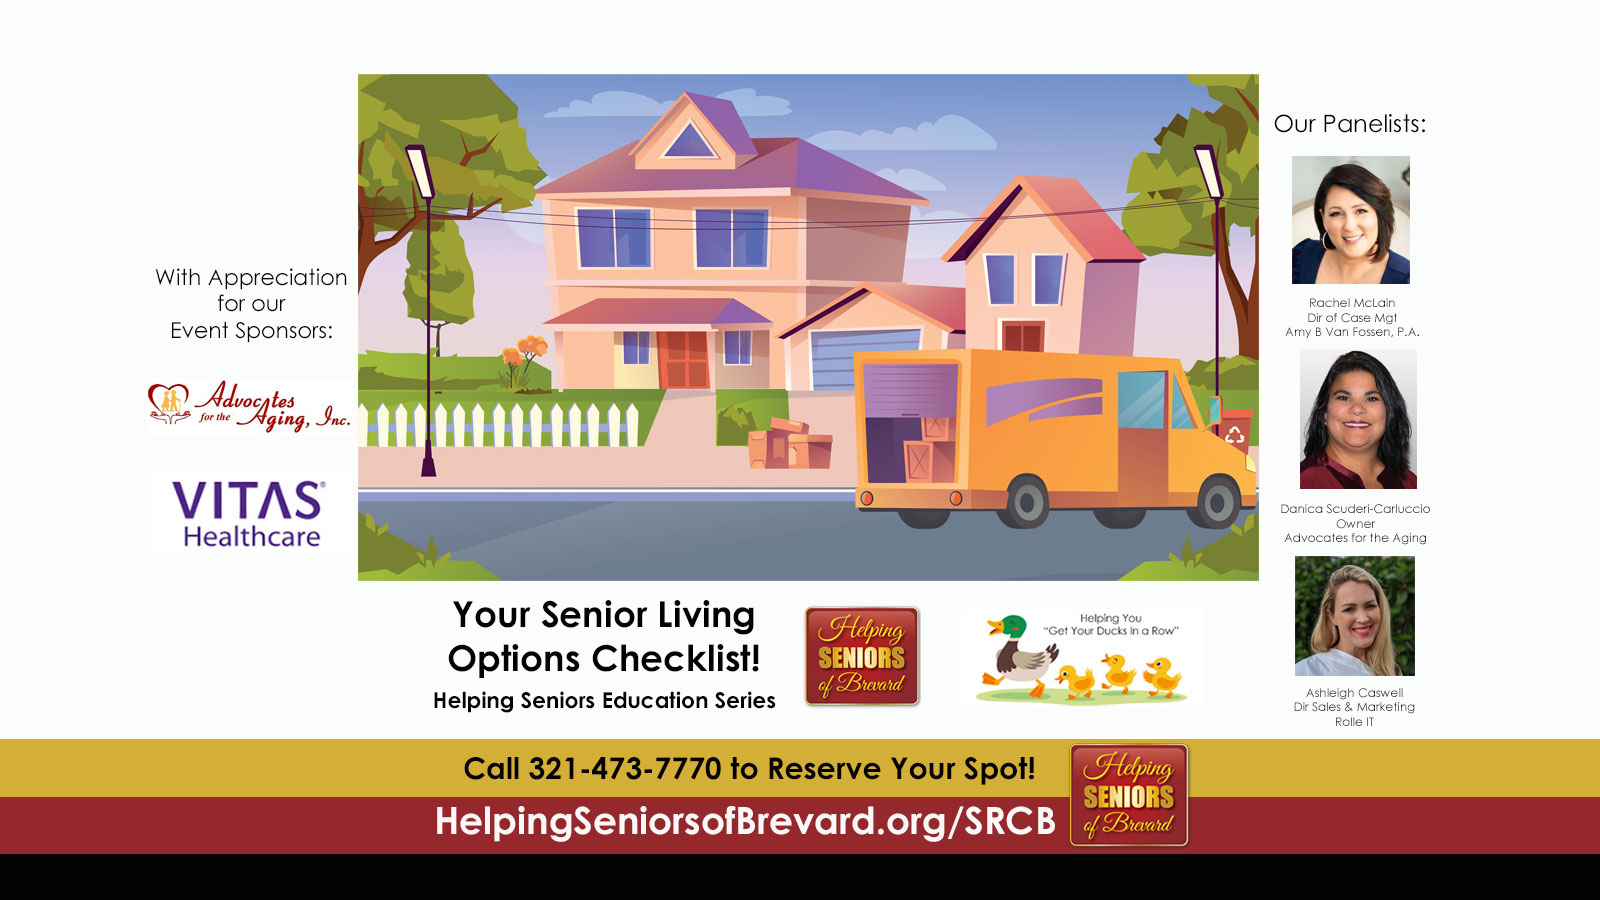 Your Senior Living Options Checklist